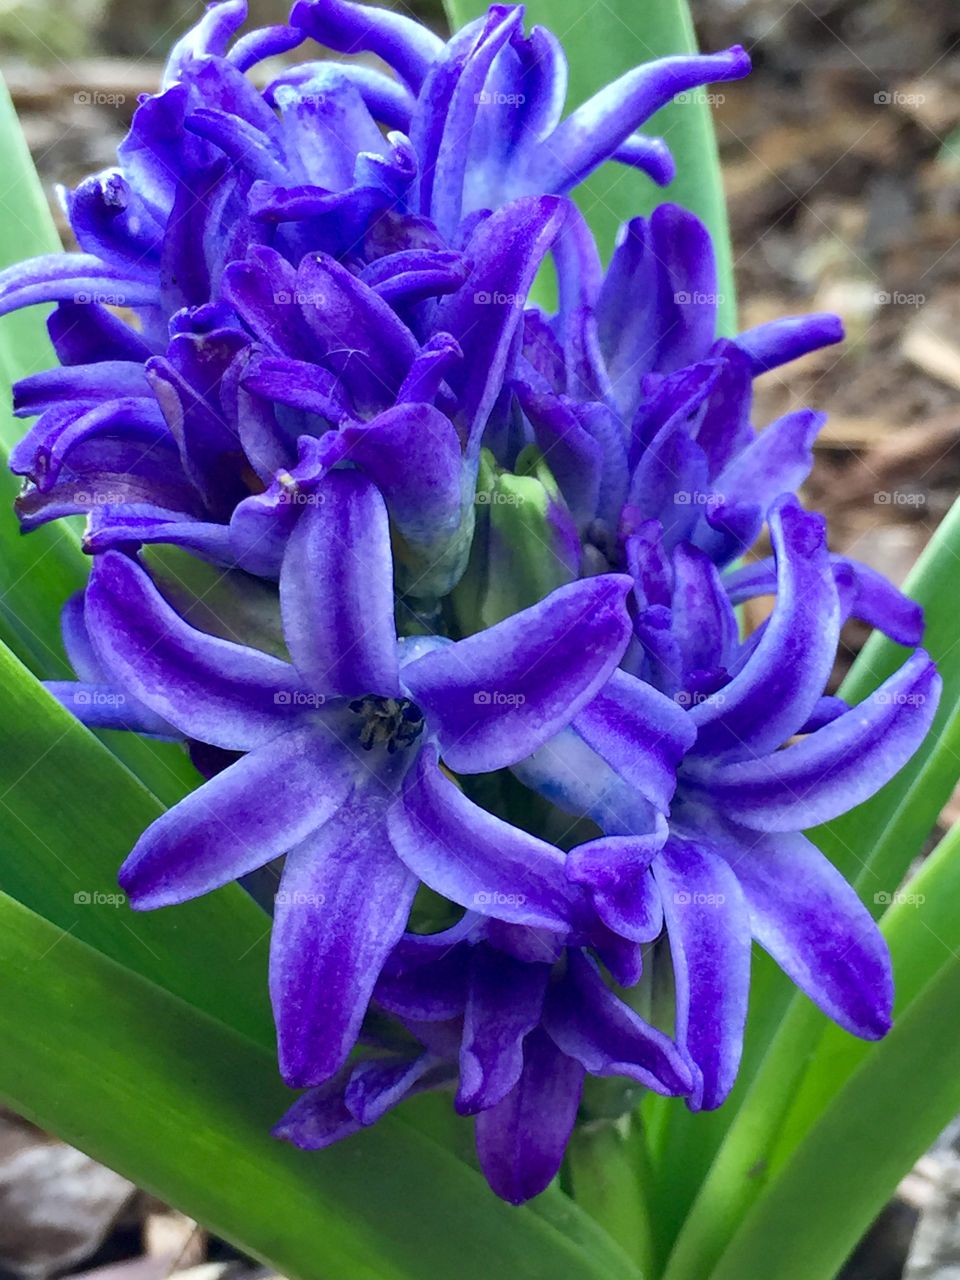 Hyacinth flower bloom